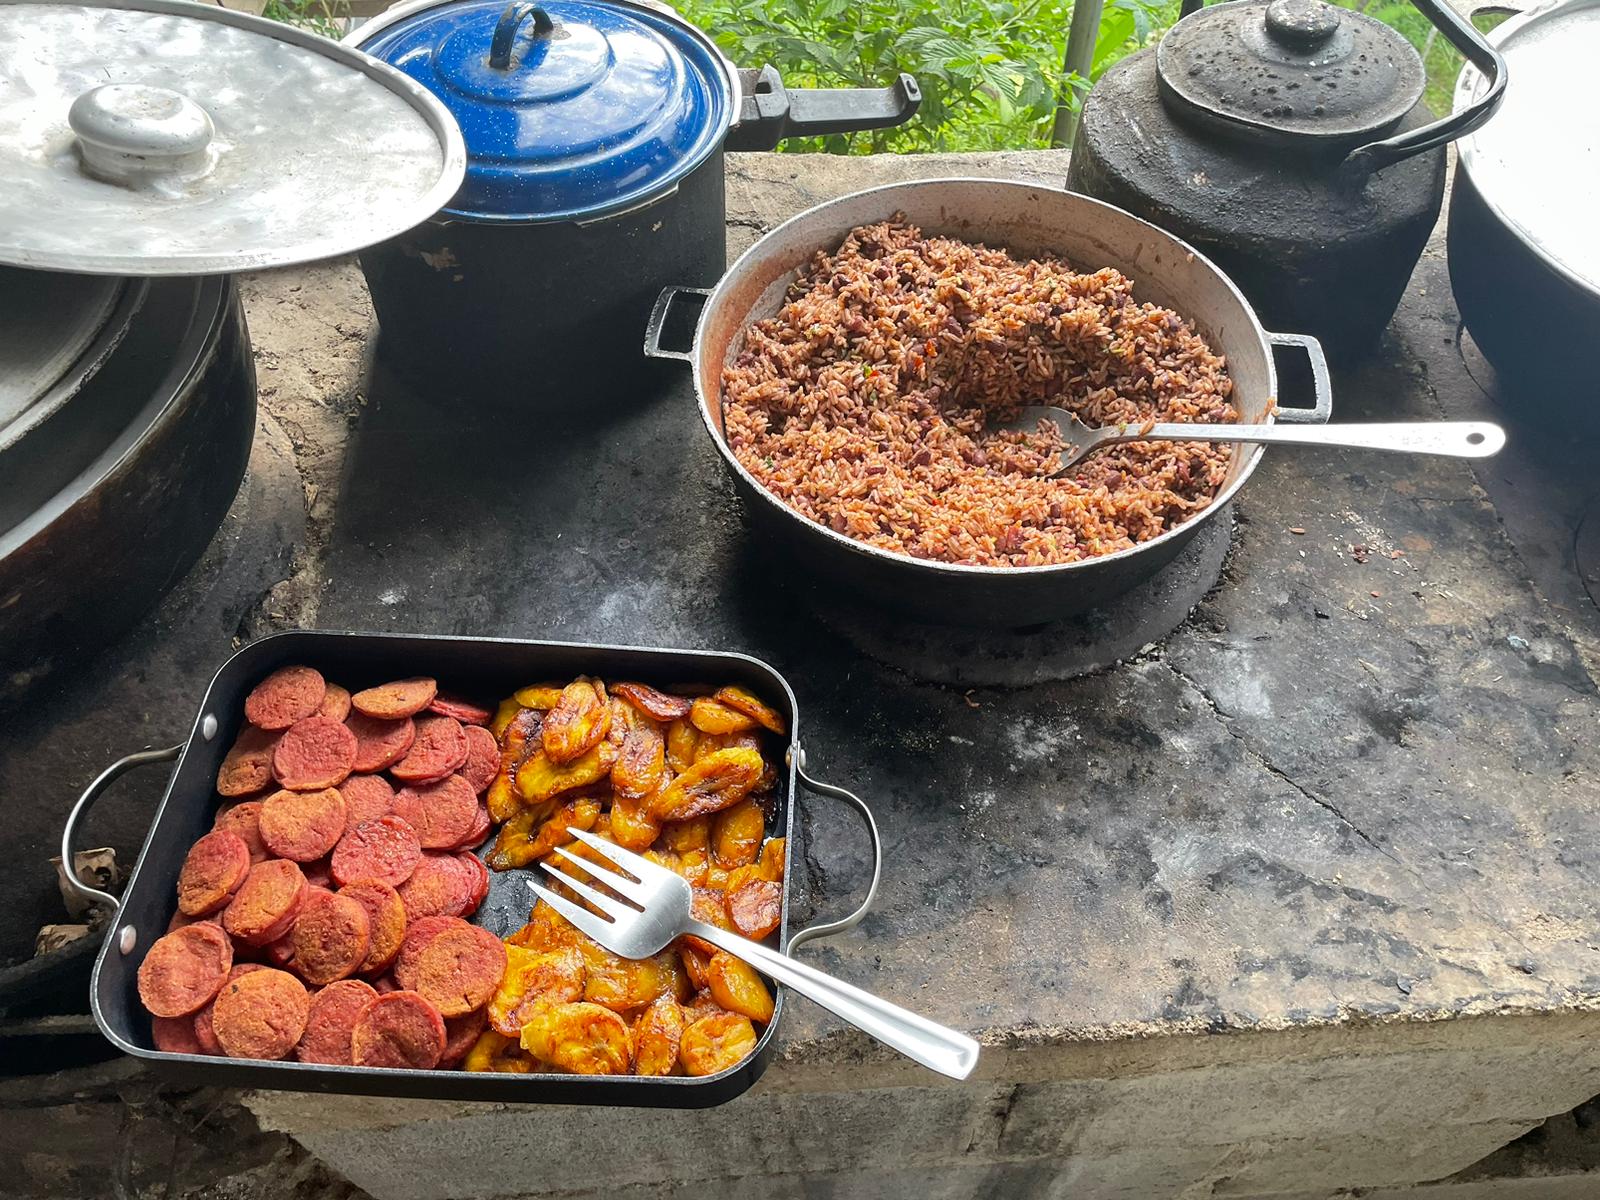 Costa Rican breakfast of sausage, plantain, rice in outdoor kitchen. Image by Rajdeep Dasgupta